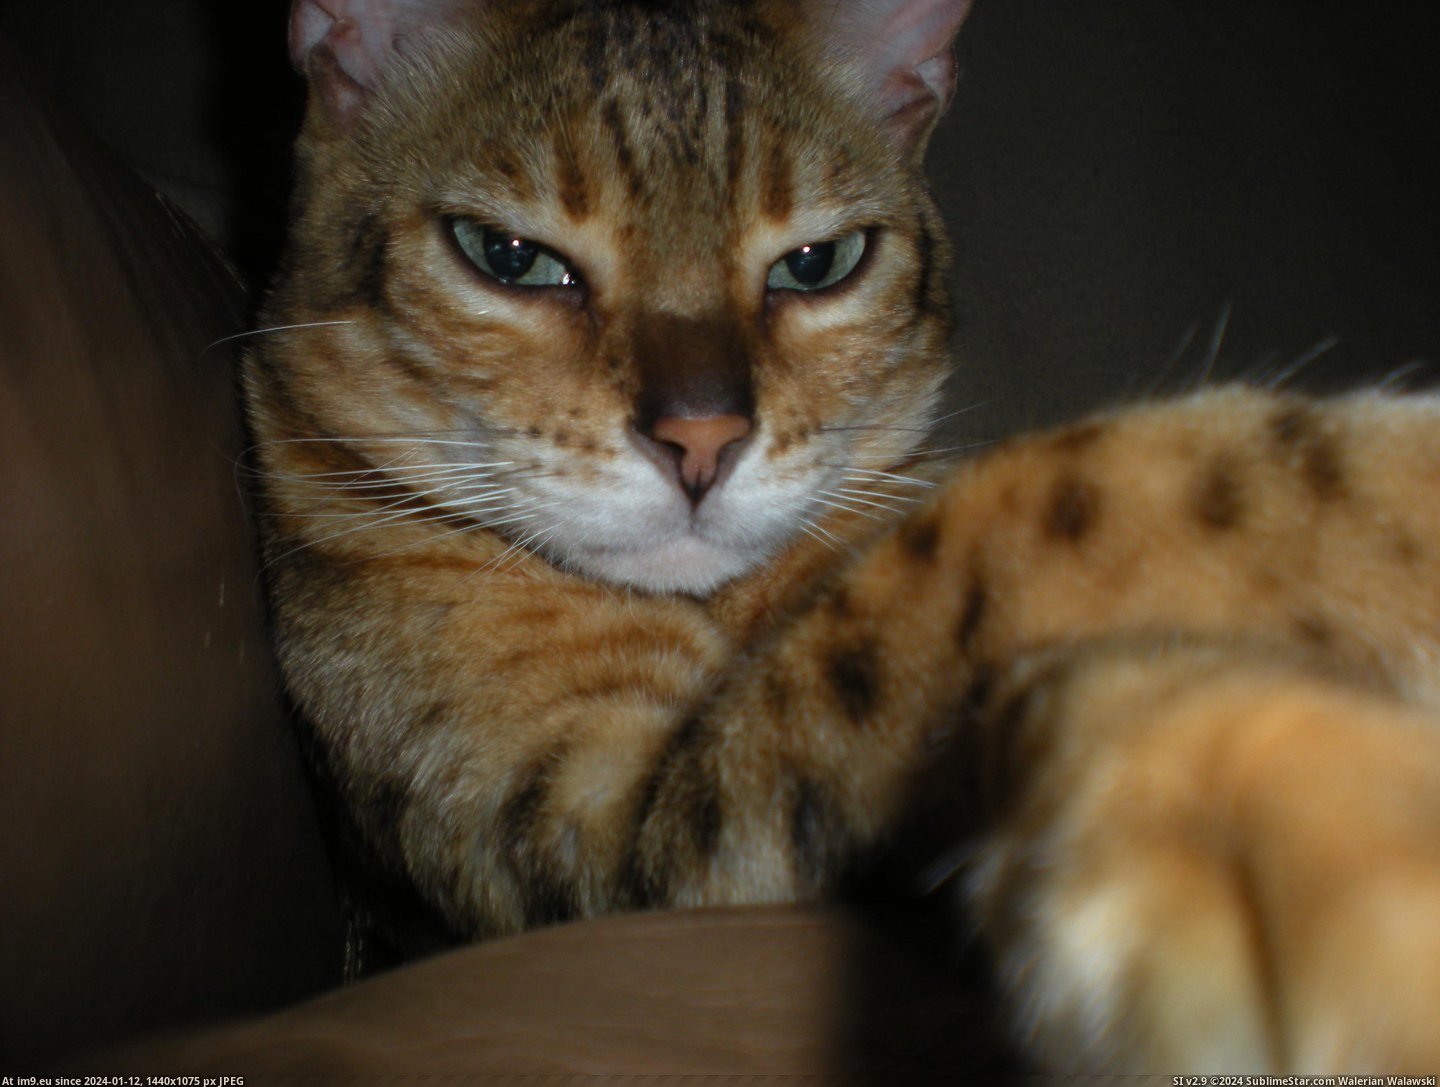 #Cats #Evening #Bond #Good [Cats] Good evening Mr. Bond. Pic. (Image of album My r/CATS favs))